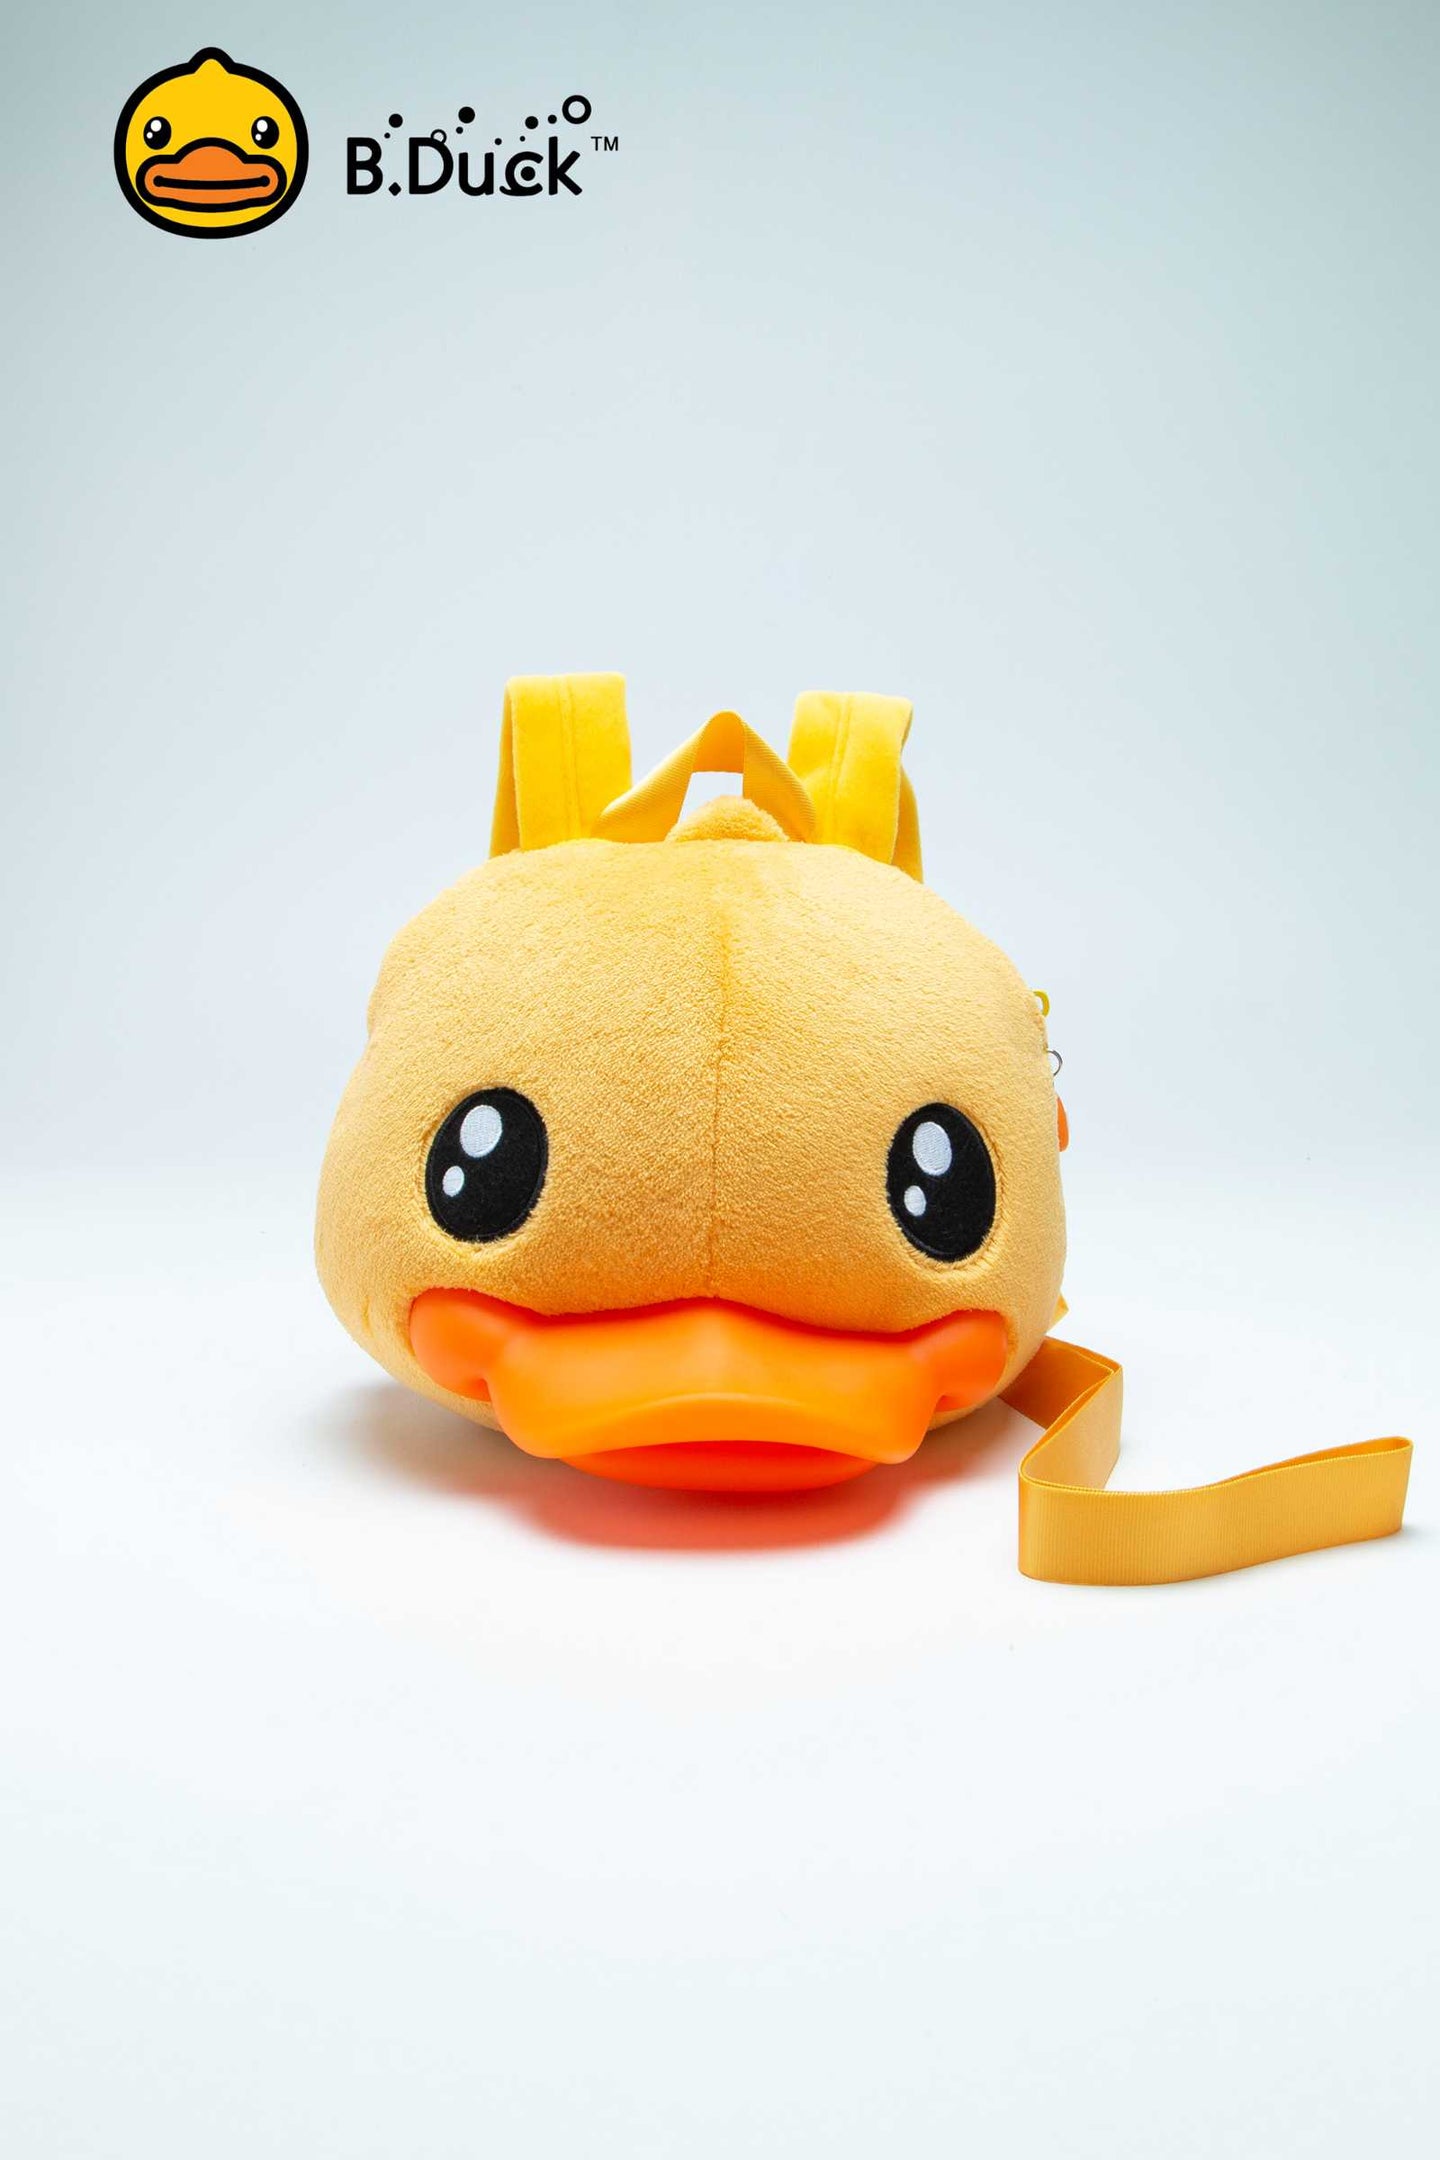 B.Duck Mini Yellow 3D Duckbill Backpack Doll Toy Cute